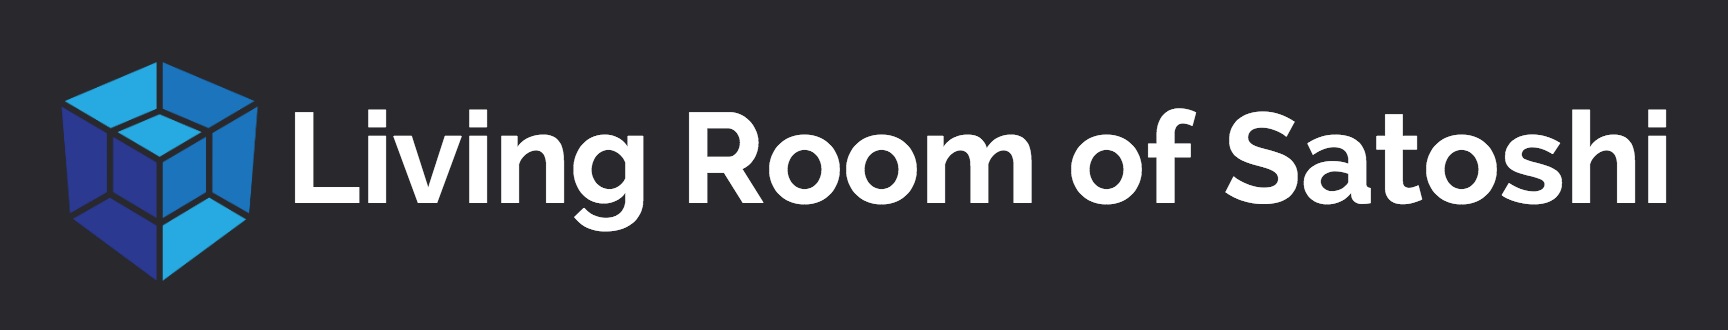 Living Room of Satoshi logo